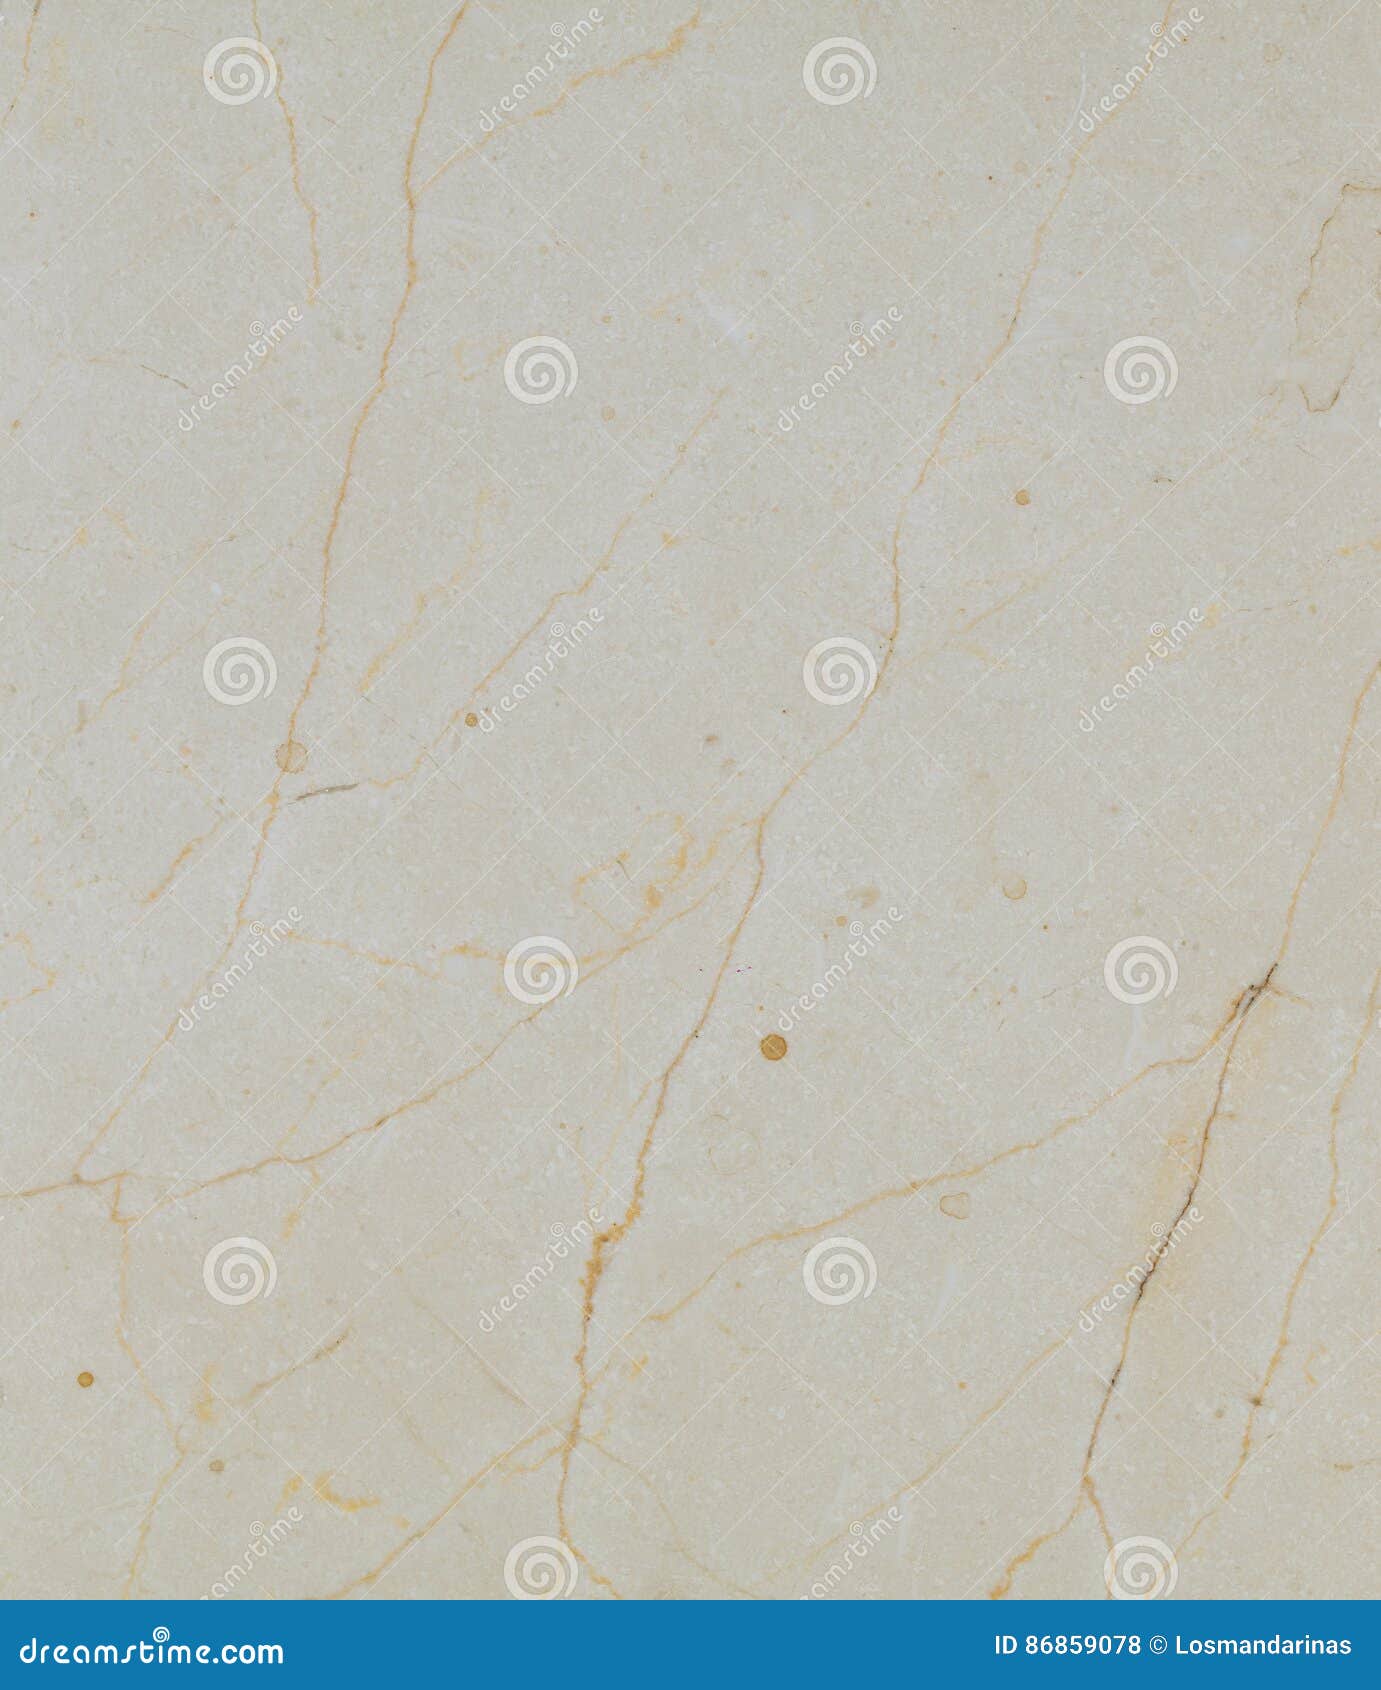 natural crema marfil marble texture